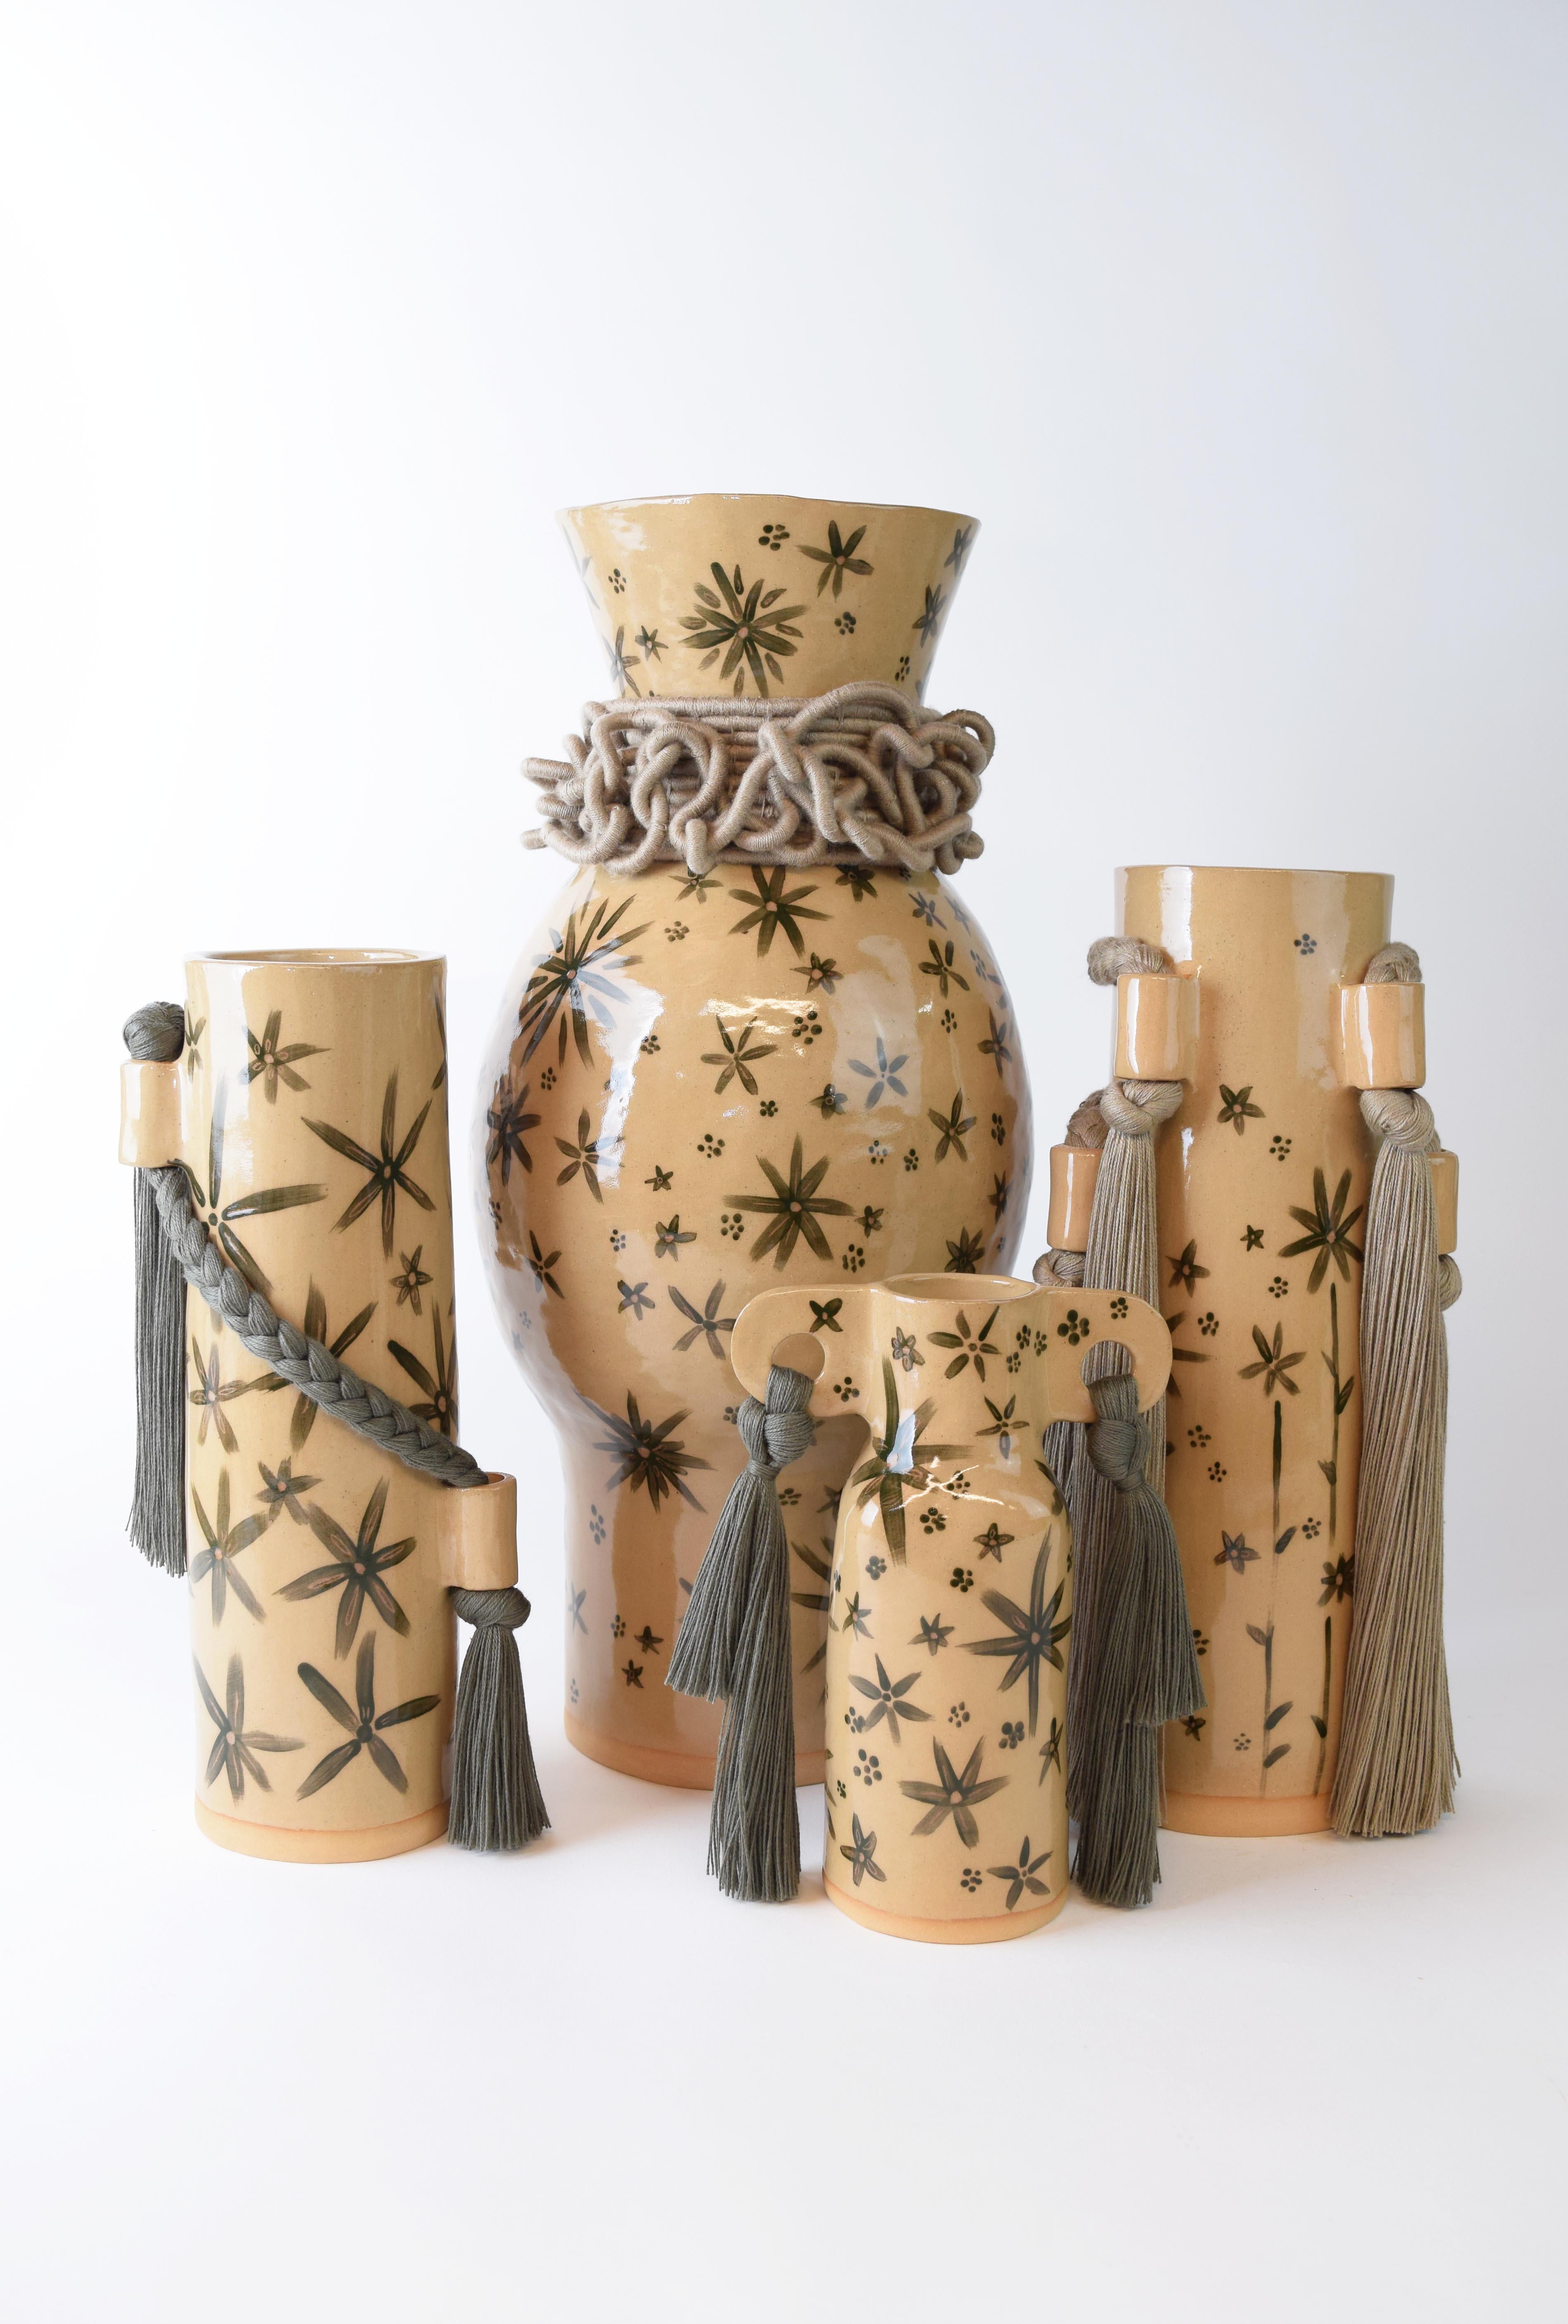 OOAK Handmade Ceramic Vase #606 - Olive Green Hand Glazed Floral & Cotton Braid 1